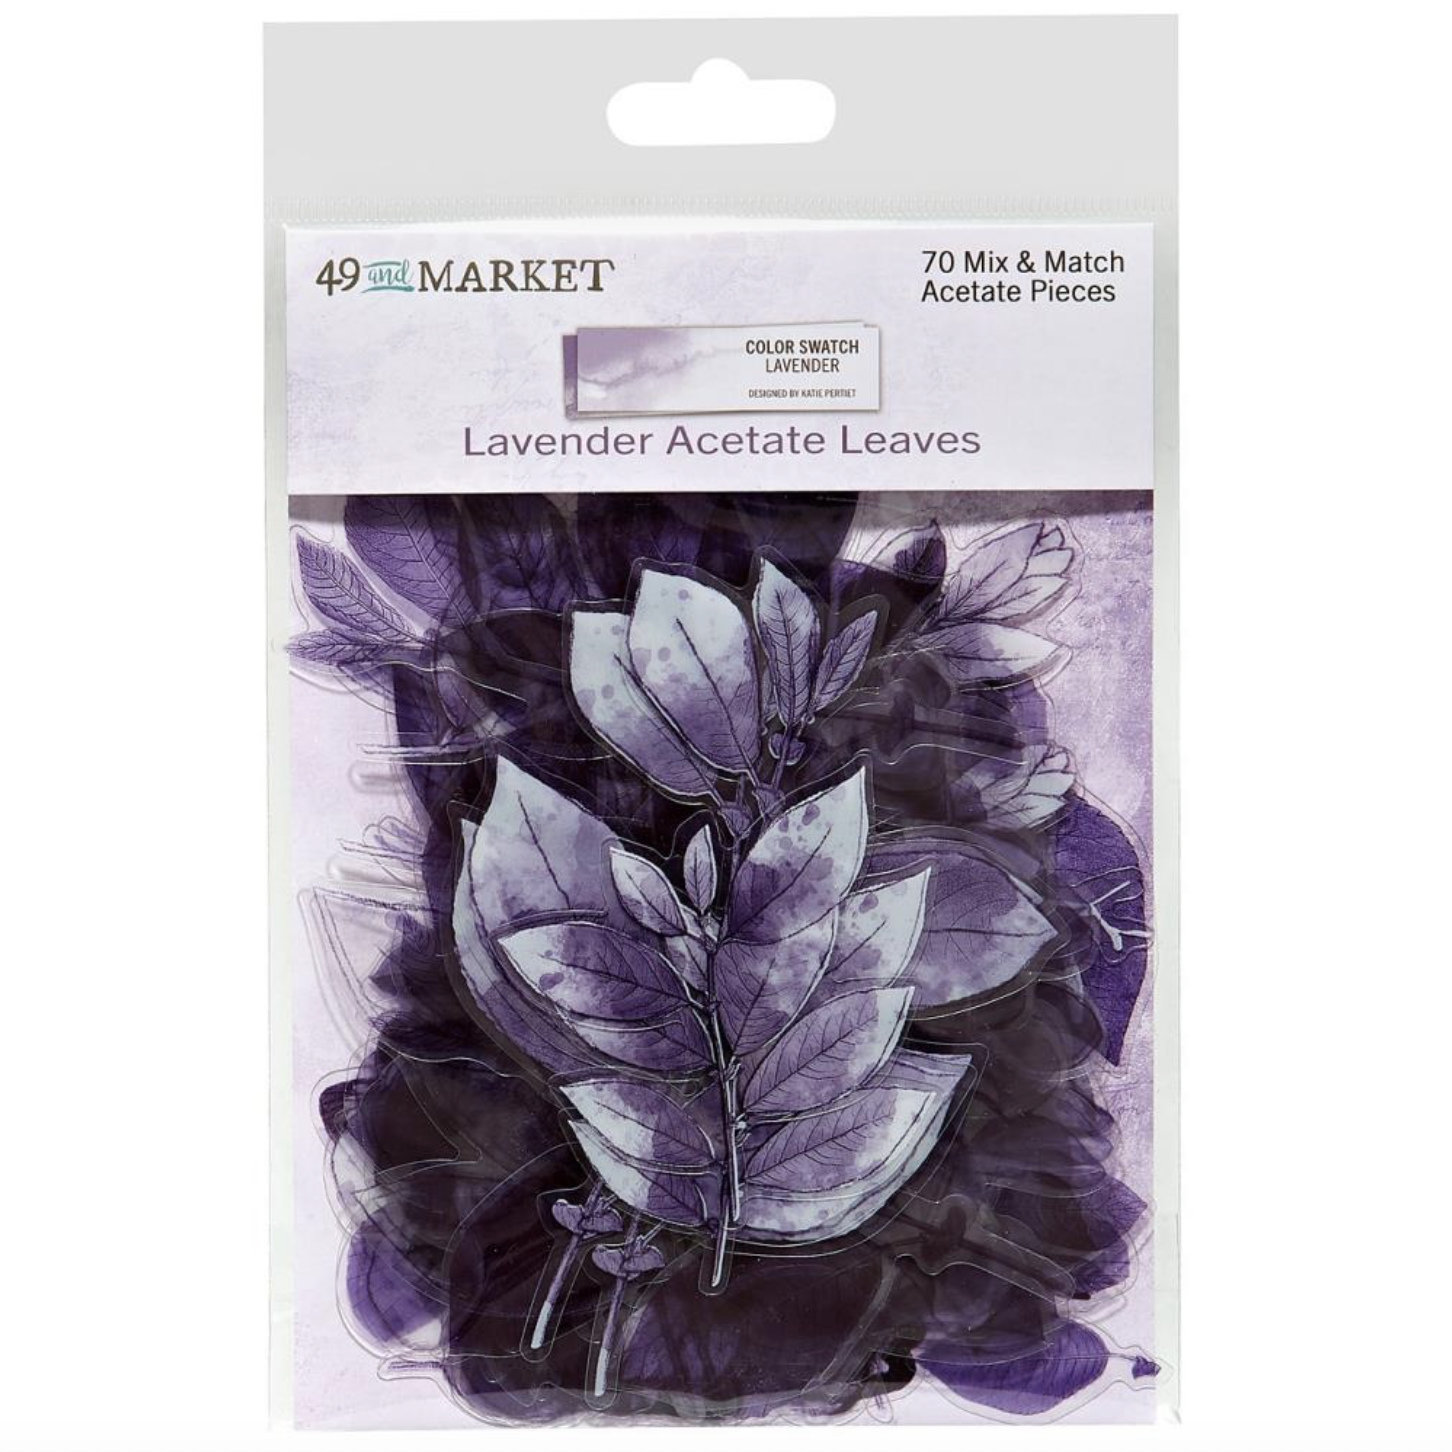 49 and Market Acetate Leaves: Lavender